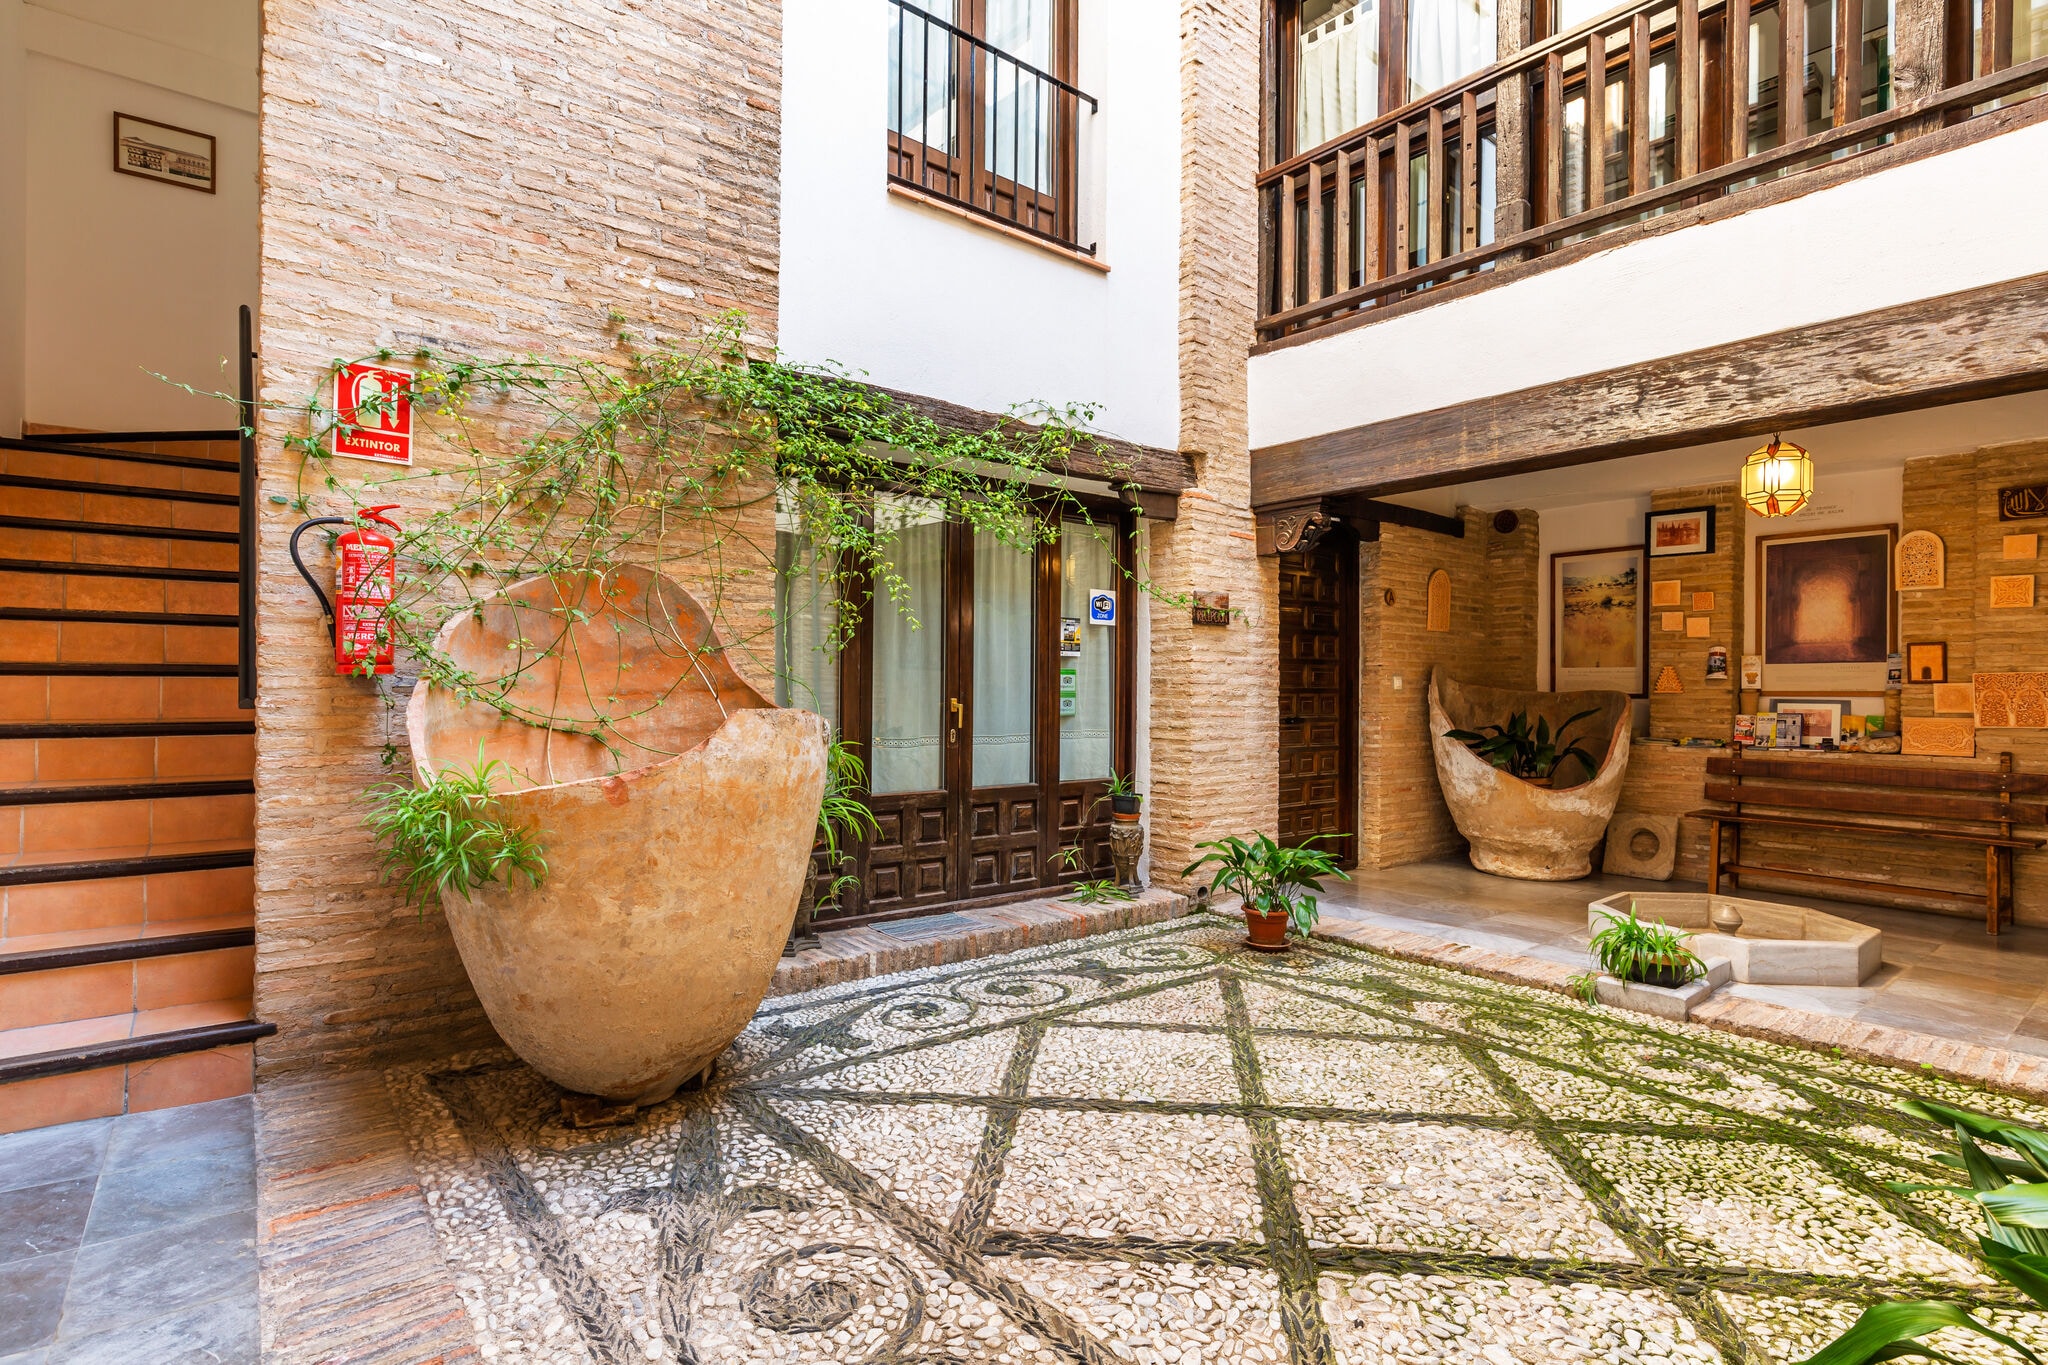 City apartment near the Alhambra (Granada).